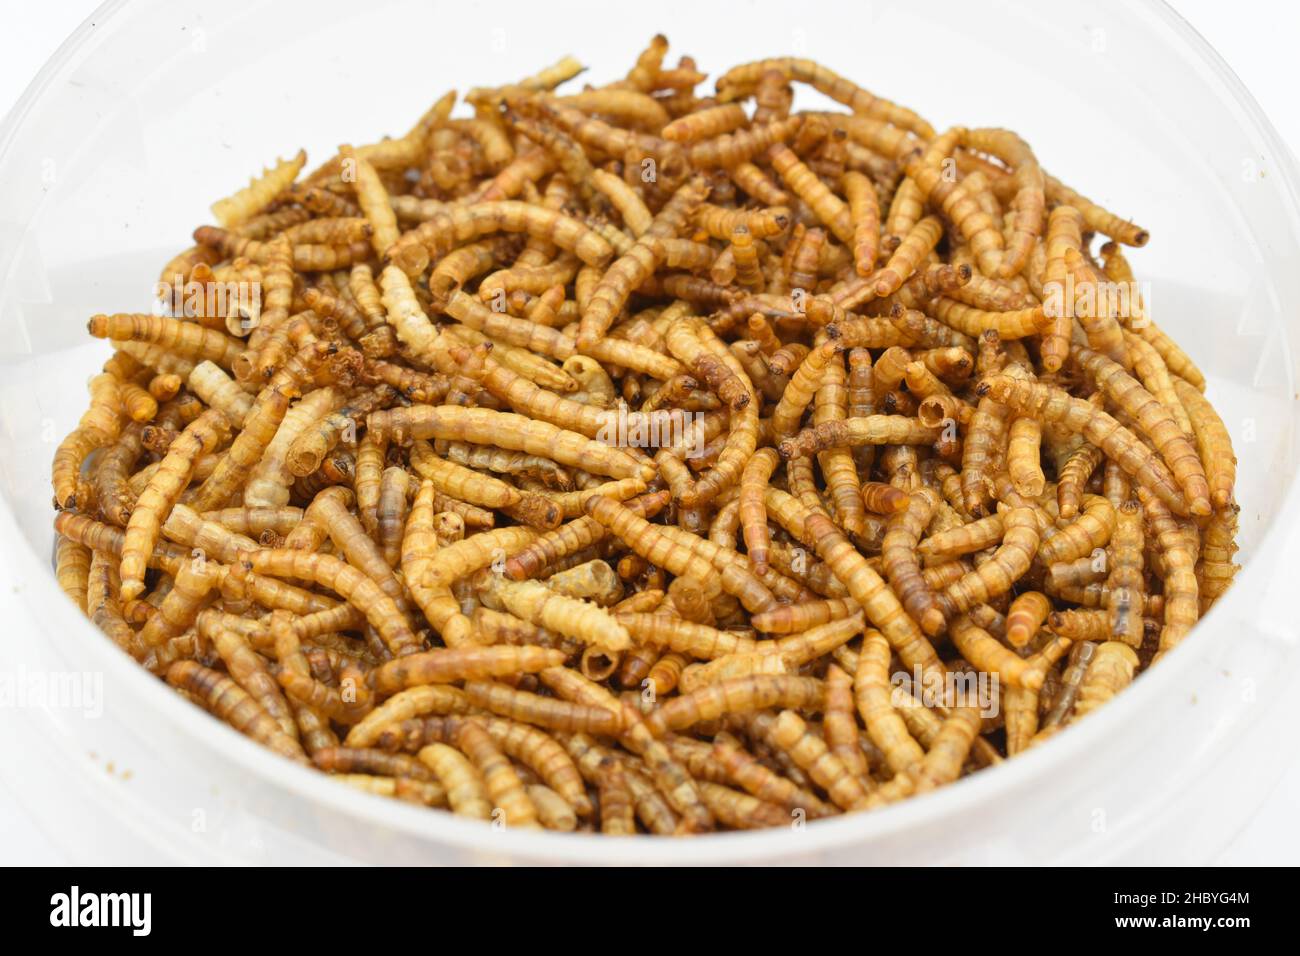 Protyn arowana fish food, dried black soilder fry larvae. Closeup view. Stock Photo